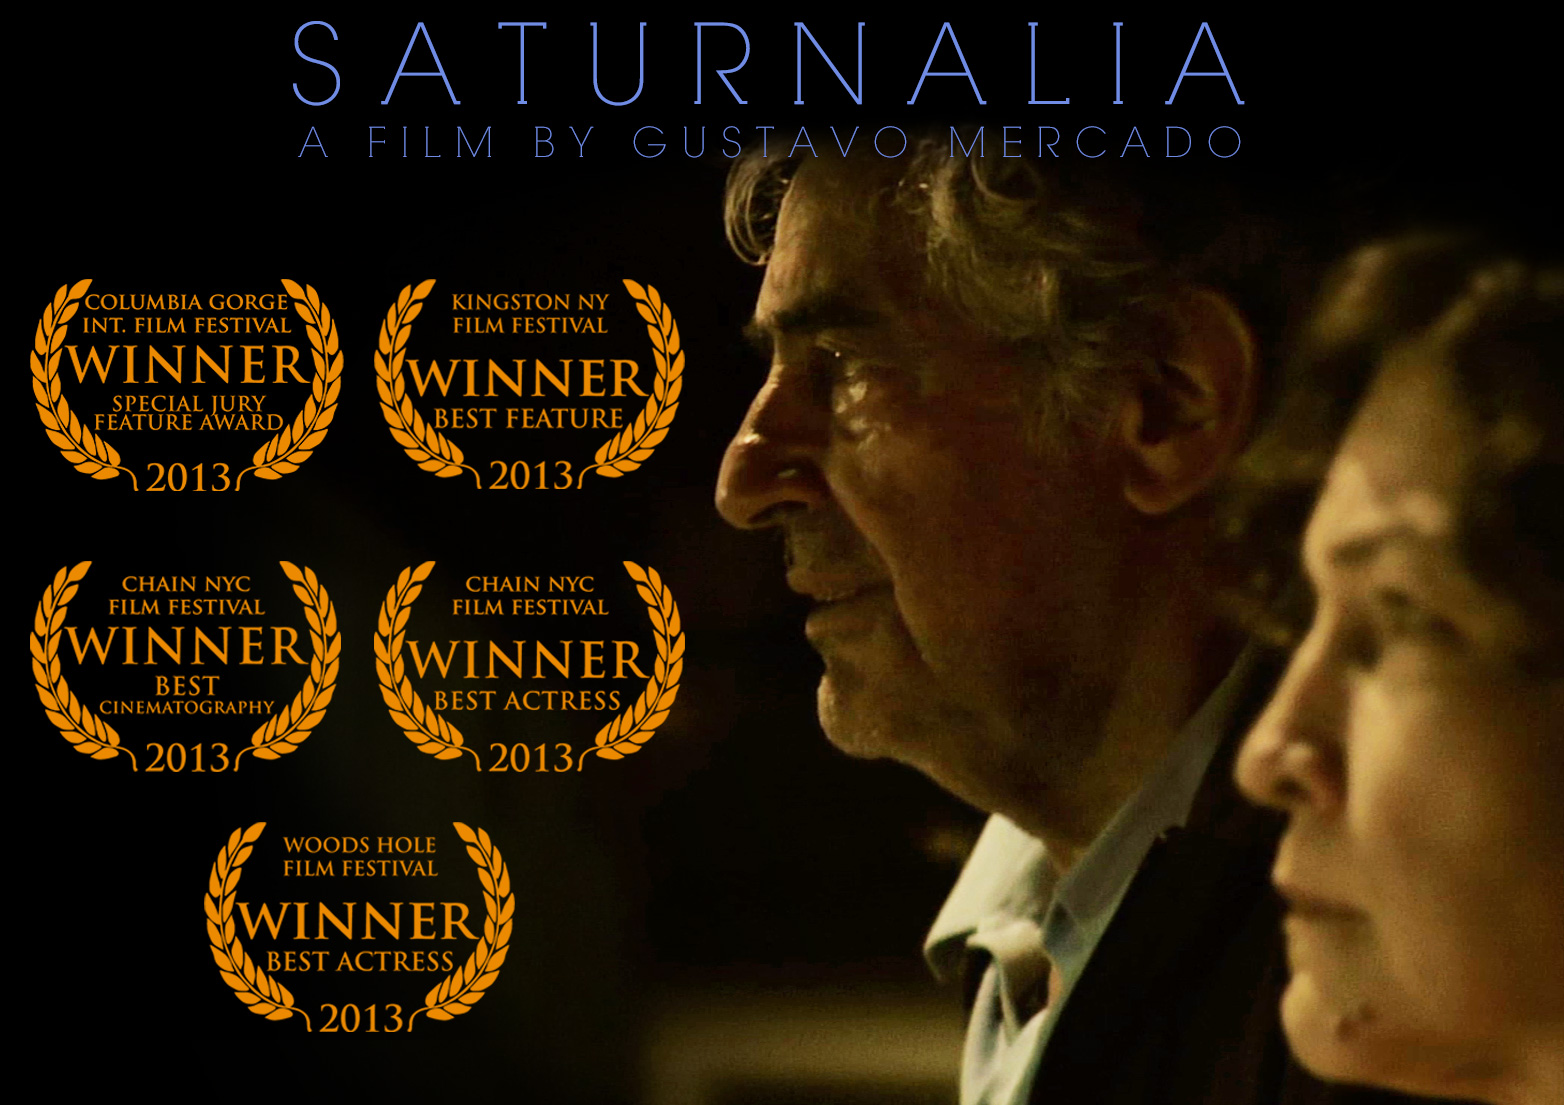 Professor Gustavo Mercado’s feature film "Saturnalia" wins multiple awards at summer film festivals